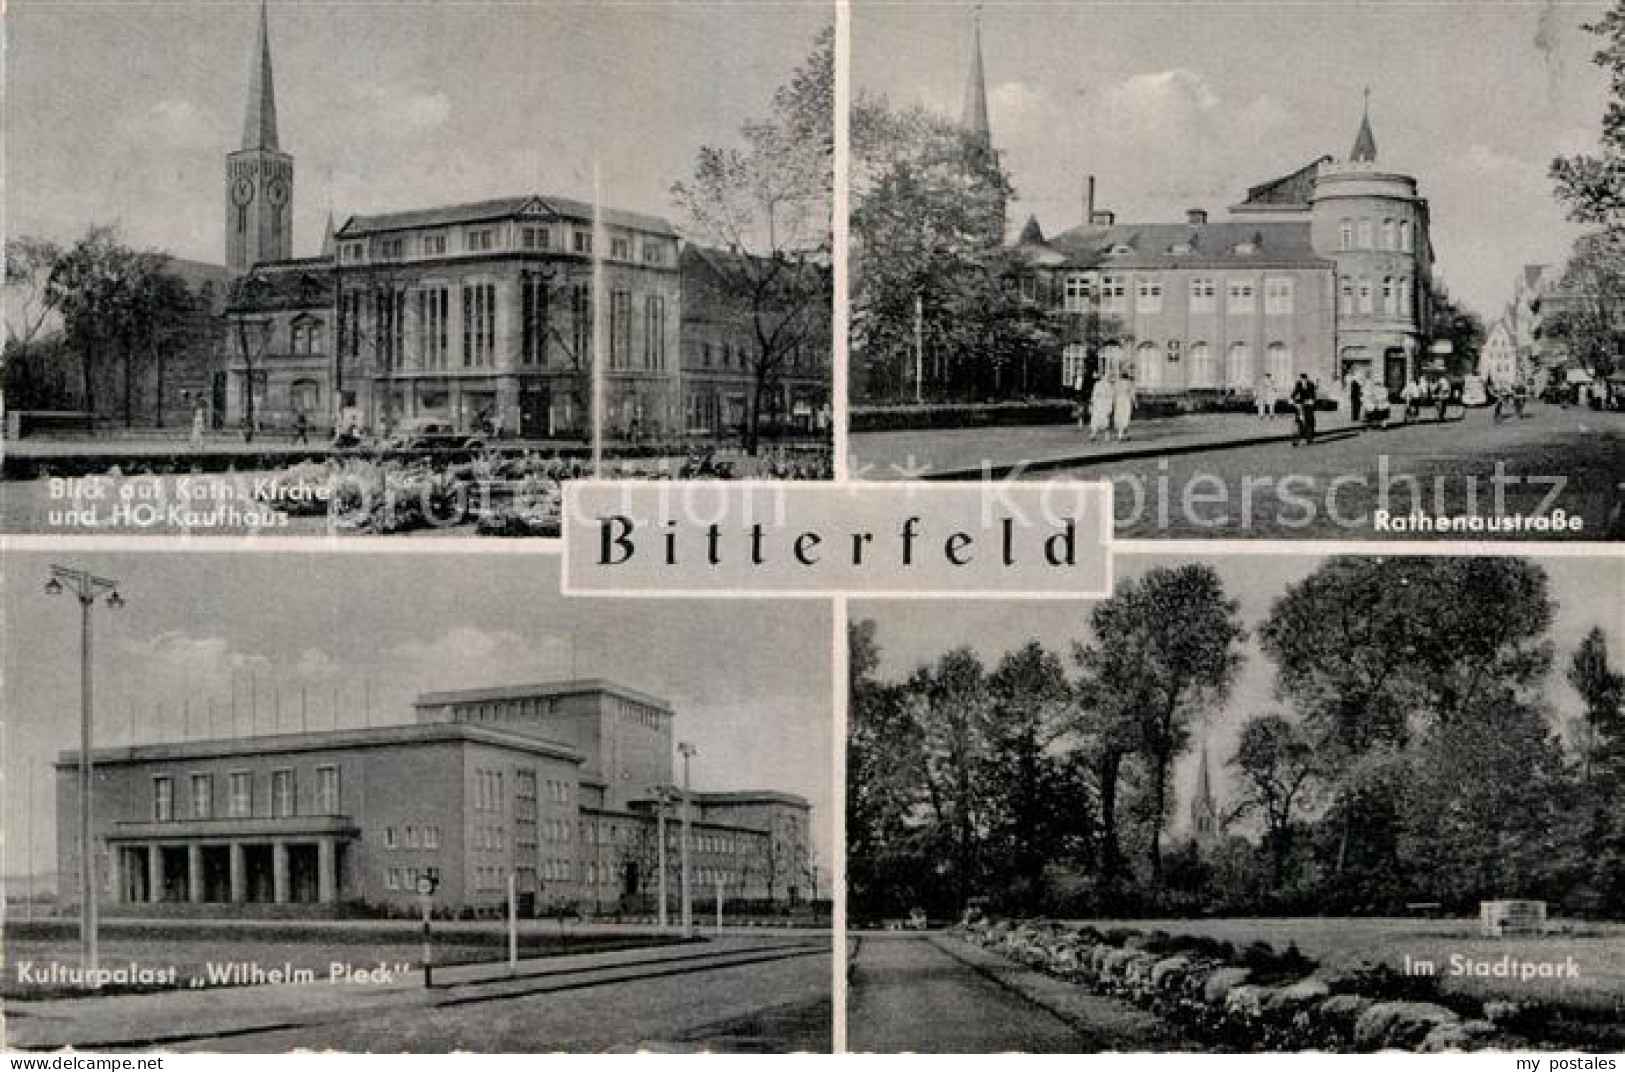 72915725 Bitterfeld HO-Kaufhaus Rathenaustrasse Kulturpalast Wilhelm Pieck Stadt - Bitterfeld